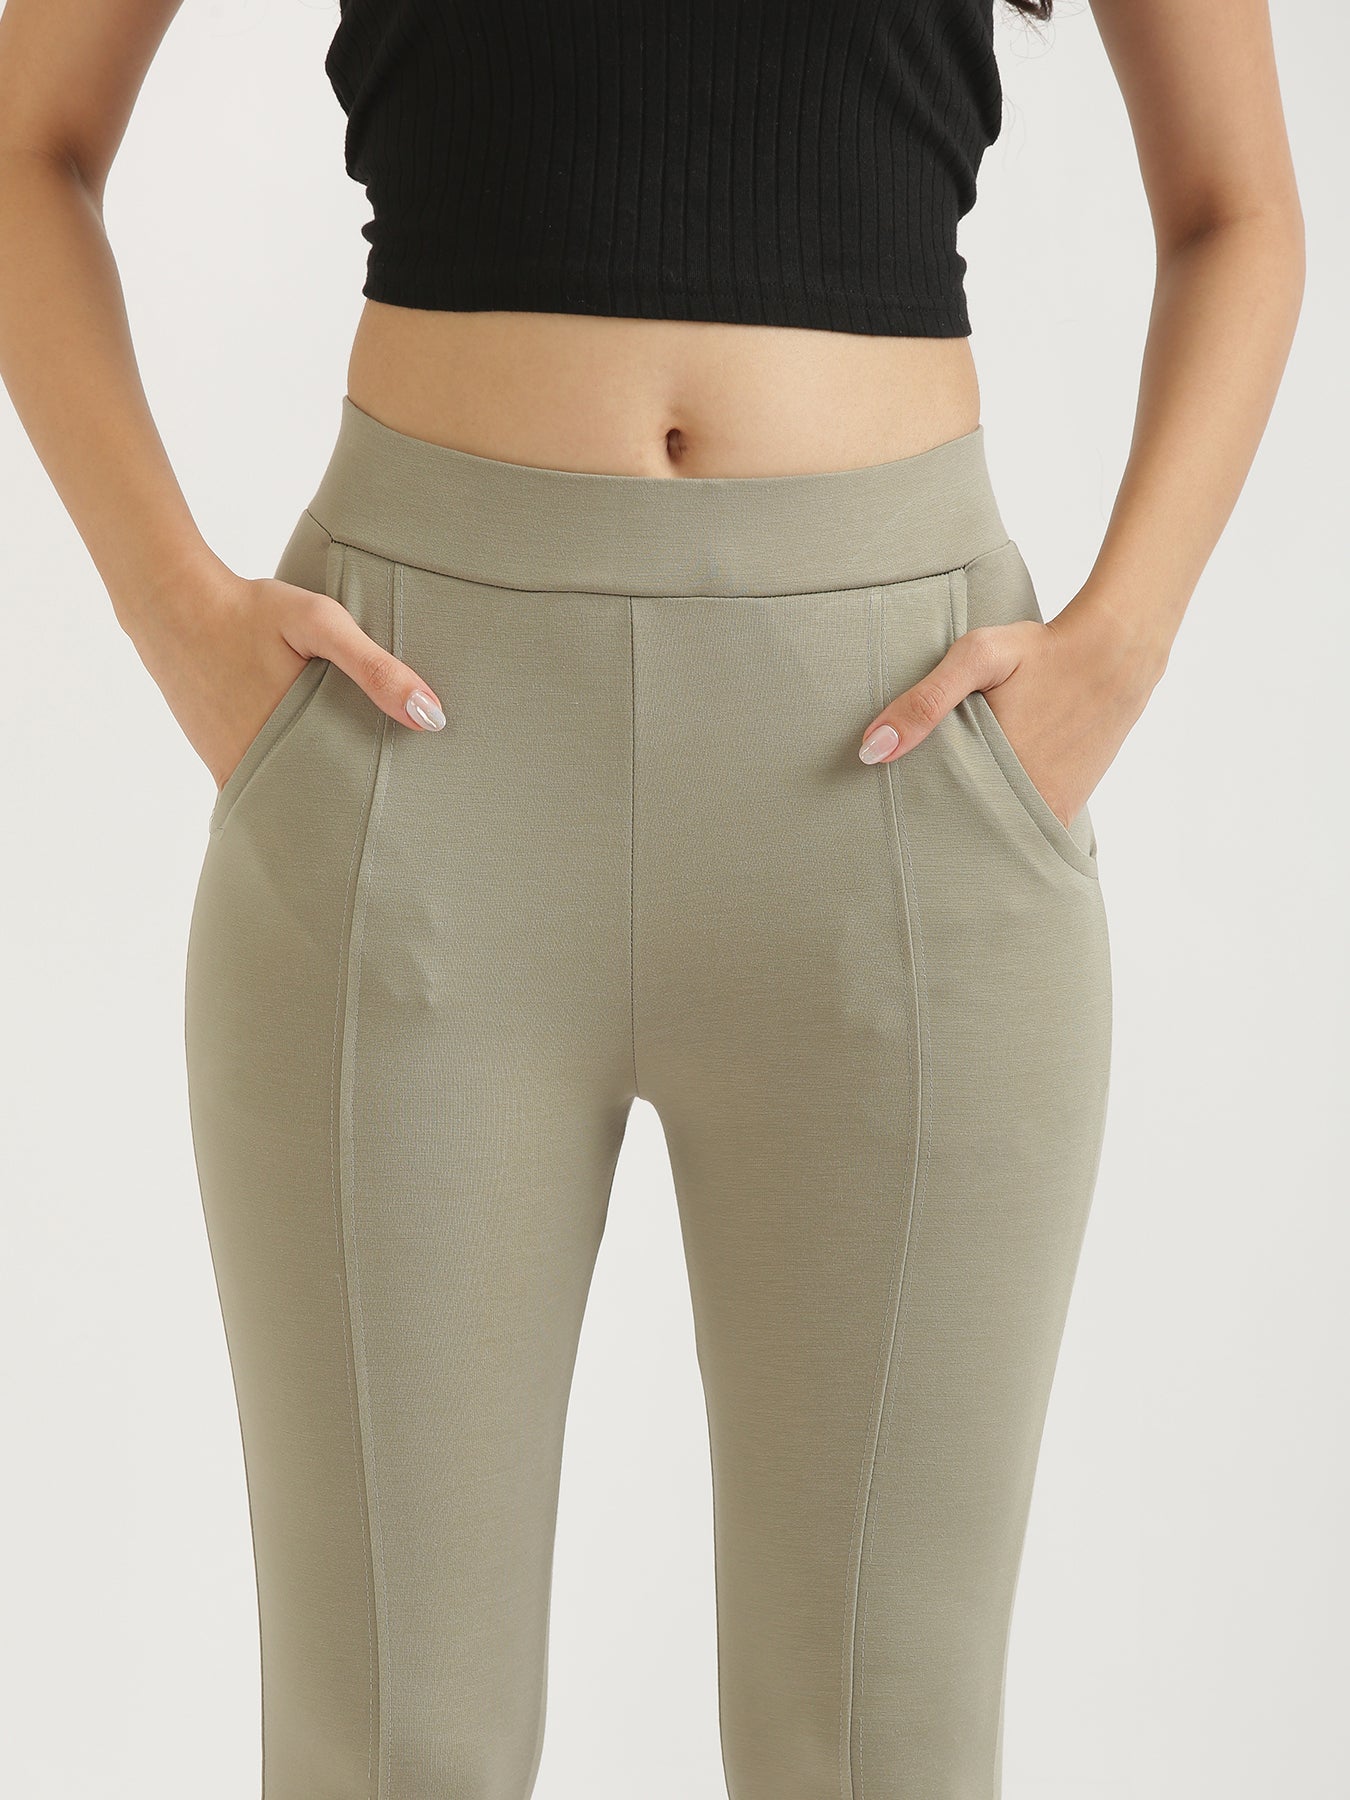 YOLA Capri Pants ~ Yoga Jogging Sports ~ Women's Cotton Spandex 4-Way  Stretch Fabric ~ Active Fashion Black - Karissa Marketing at Rs 756.00,  Jaipur